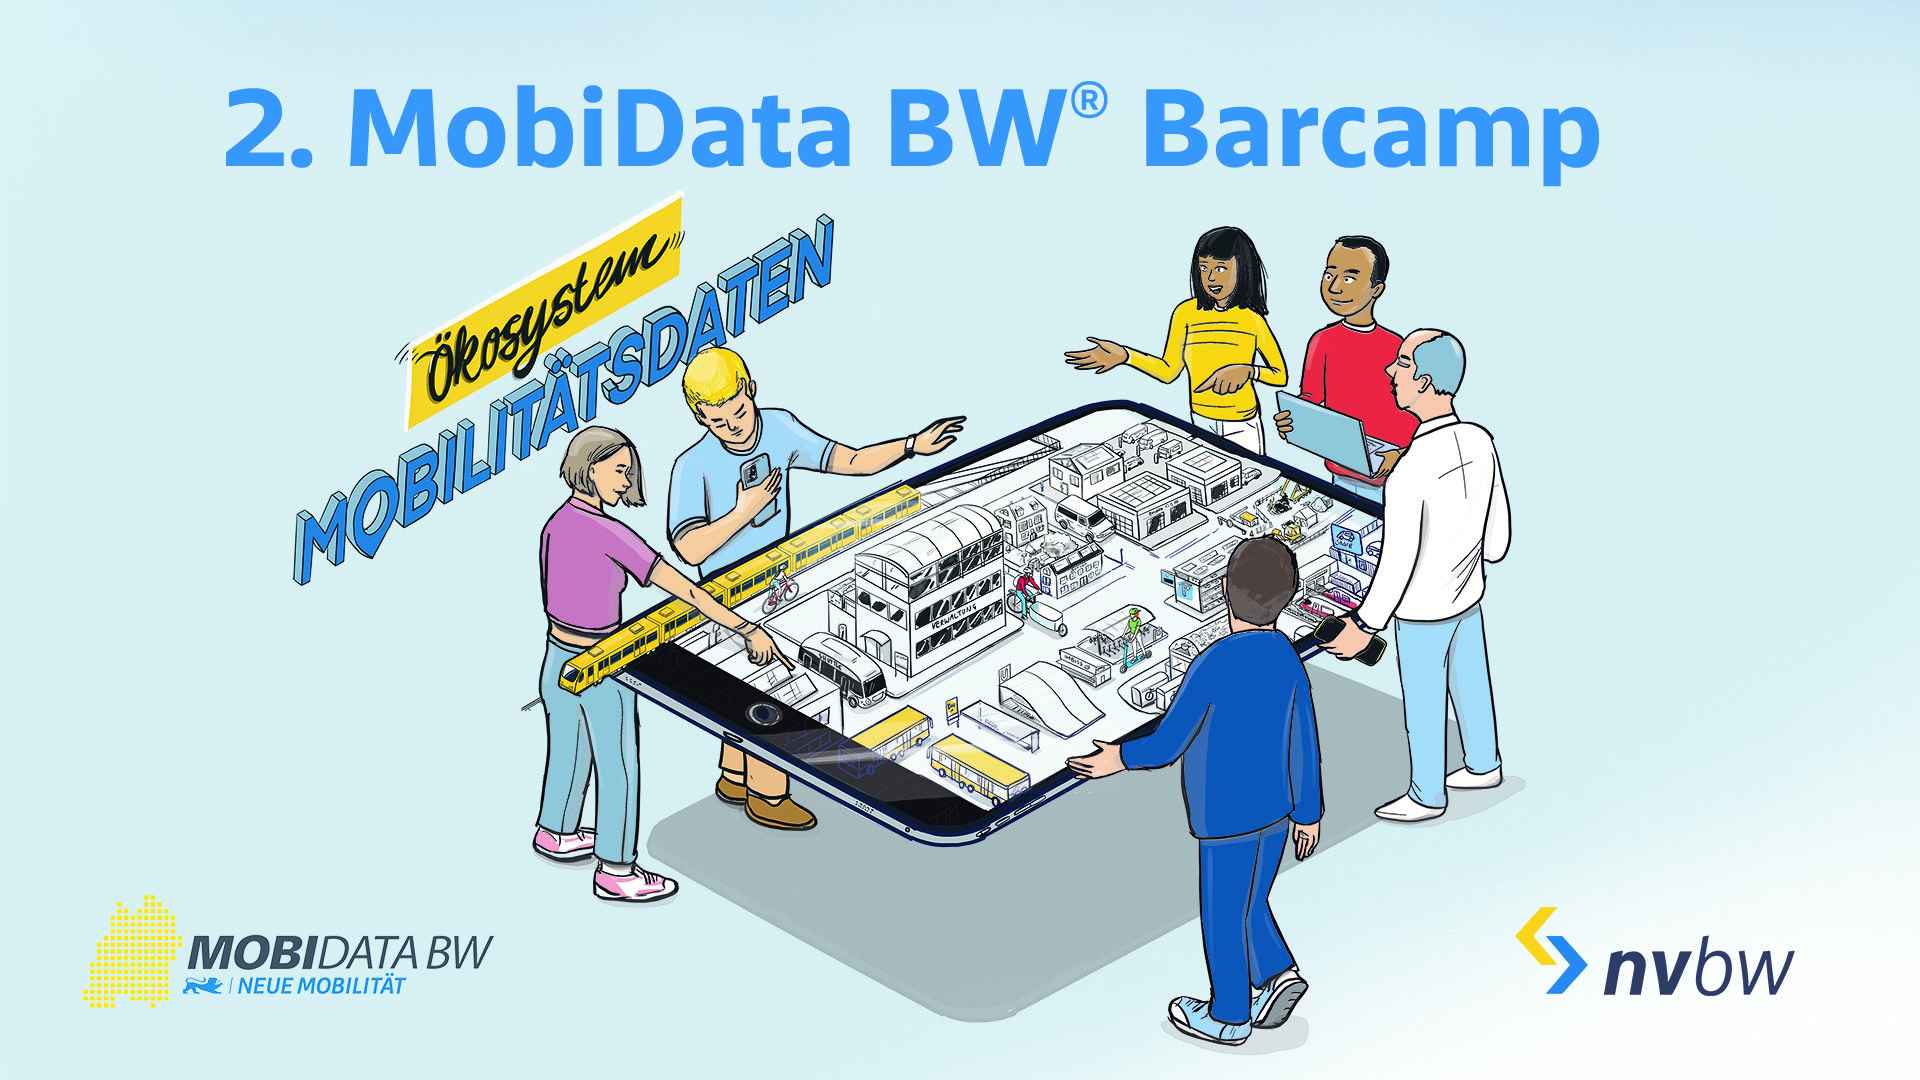 2nd MobiData BW Barcamp at SpOrt Stuttgart